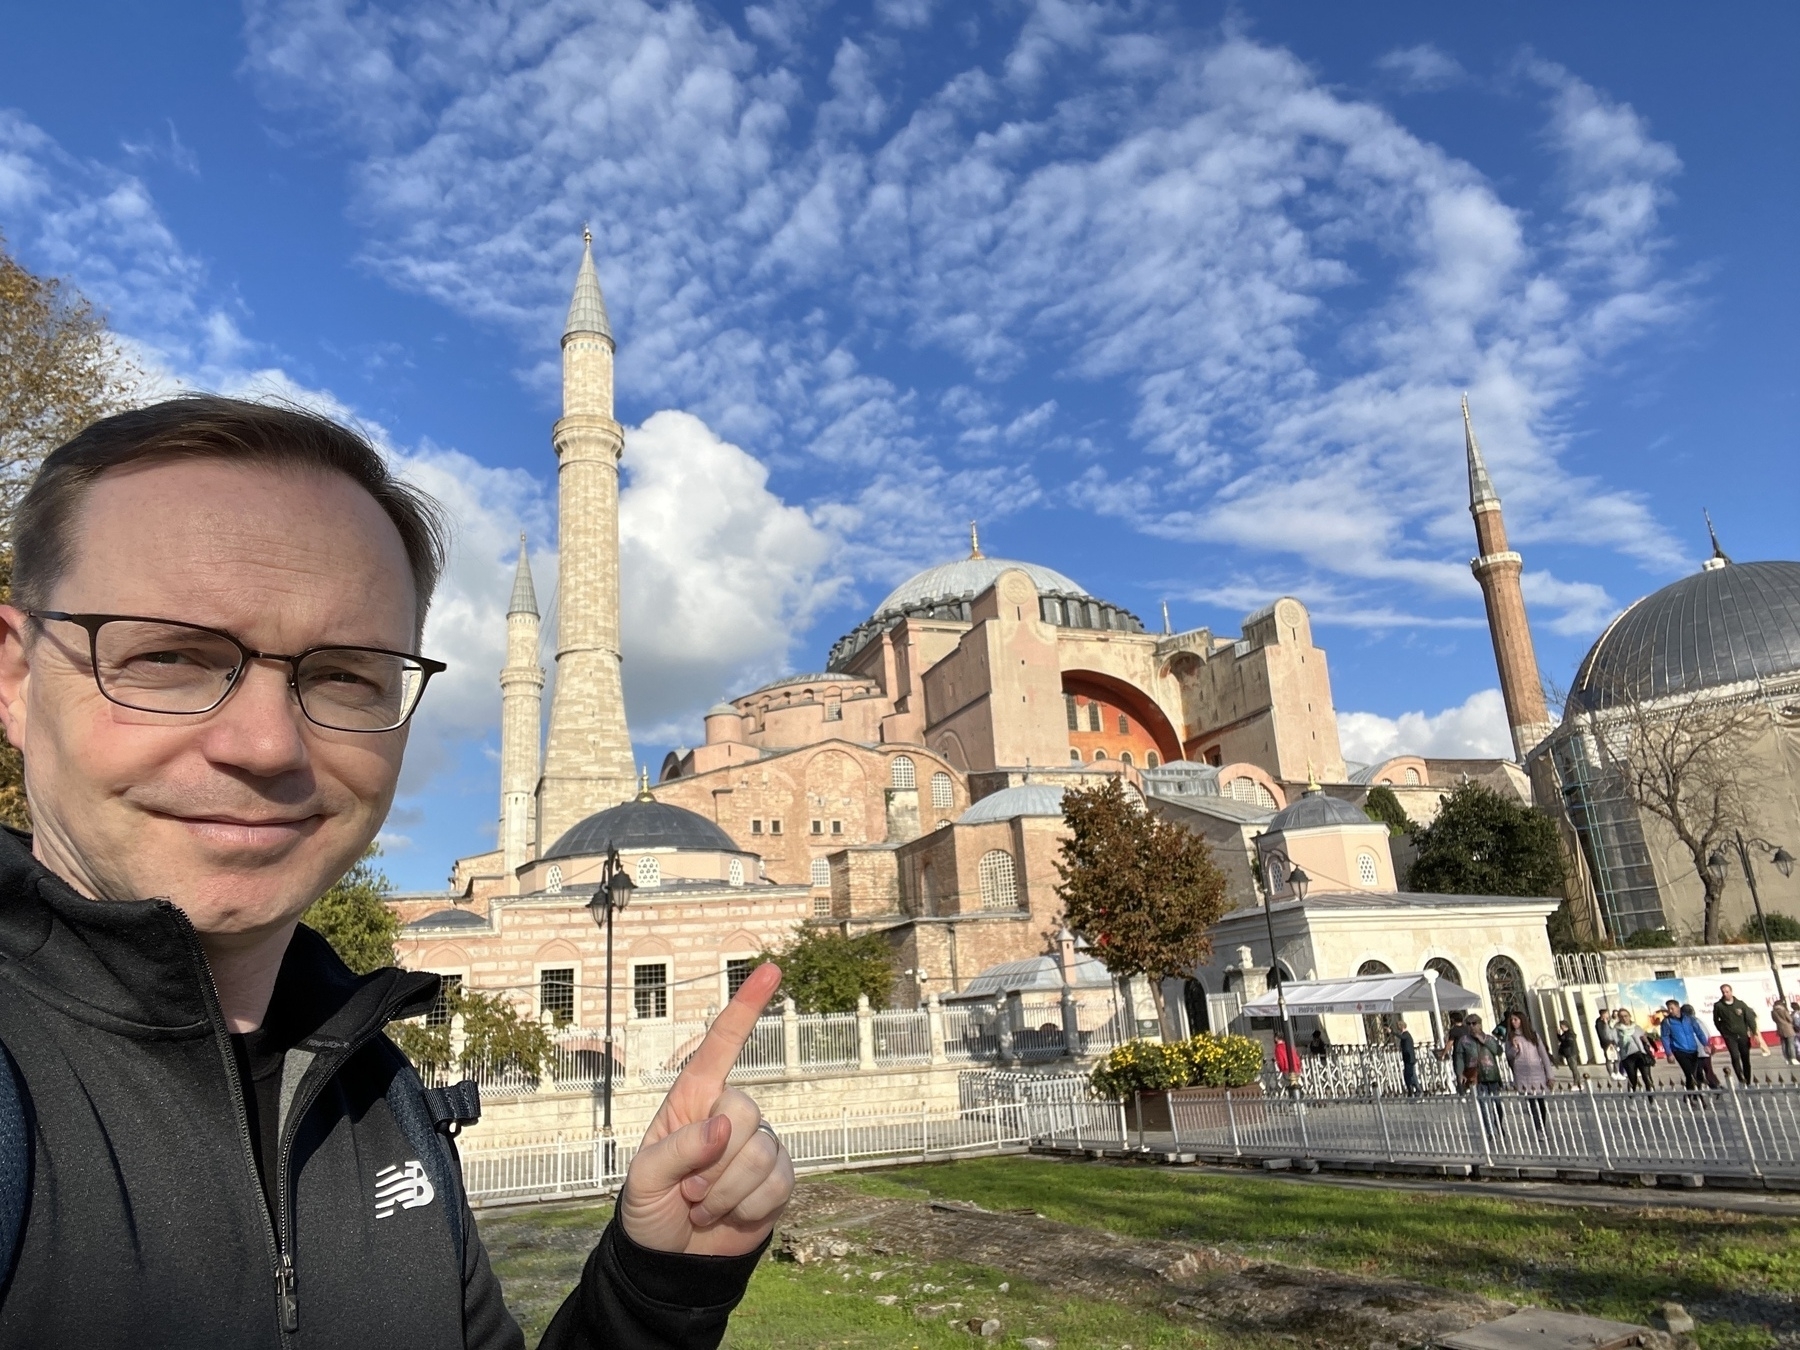 Chad selfie with the Hagia Sophia